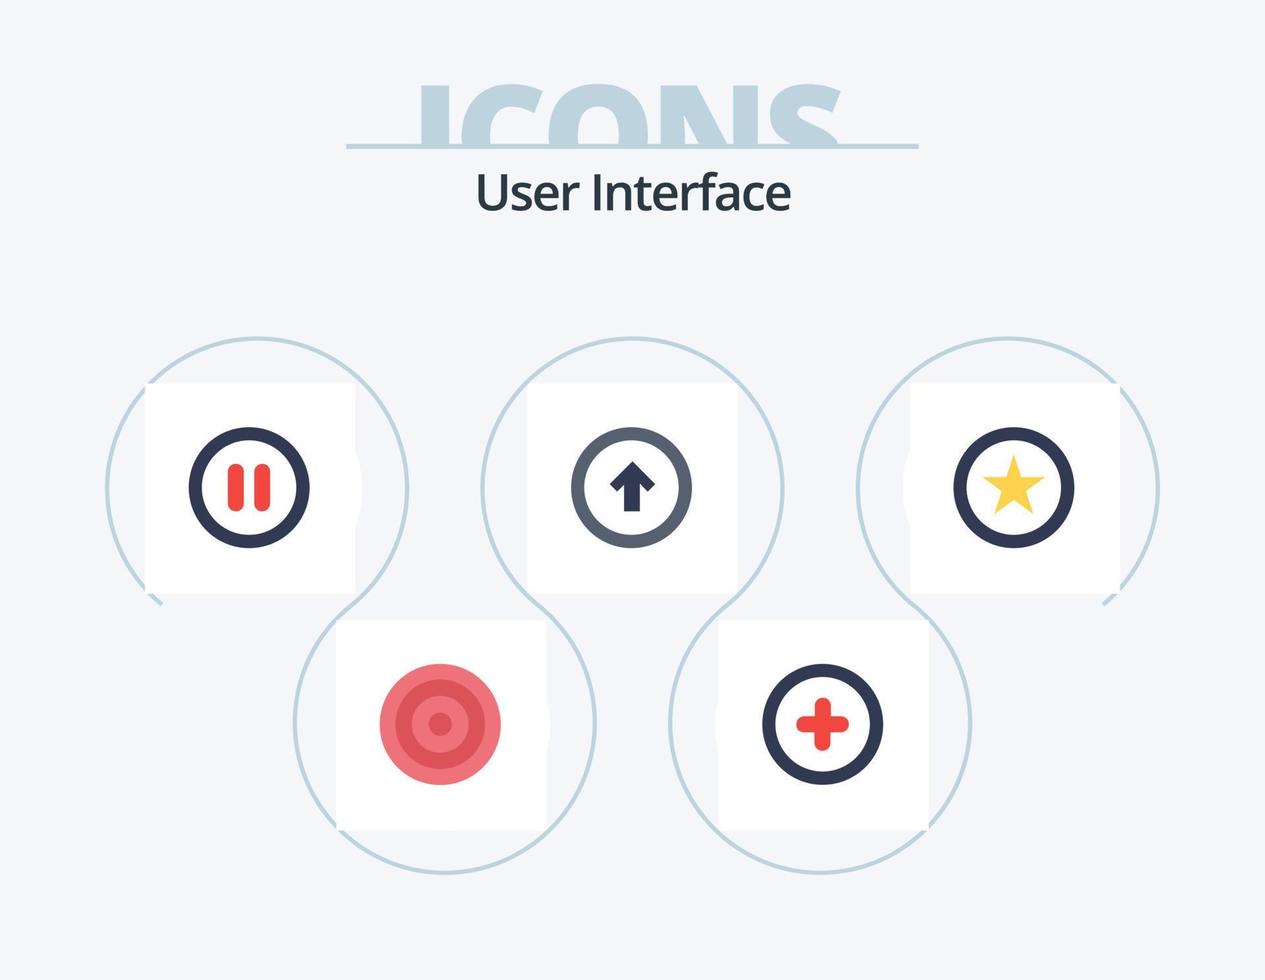 interfaz de usuario paquete de iconos planos 5 diseño de iconos. usuario. favorito. pausa. arriba. usuario vector